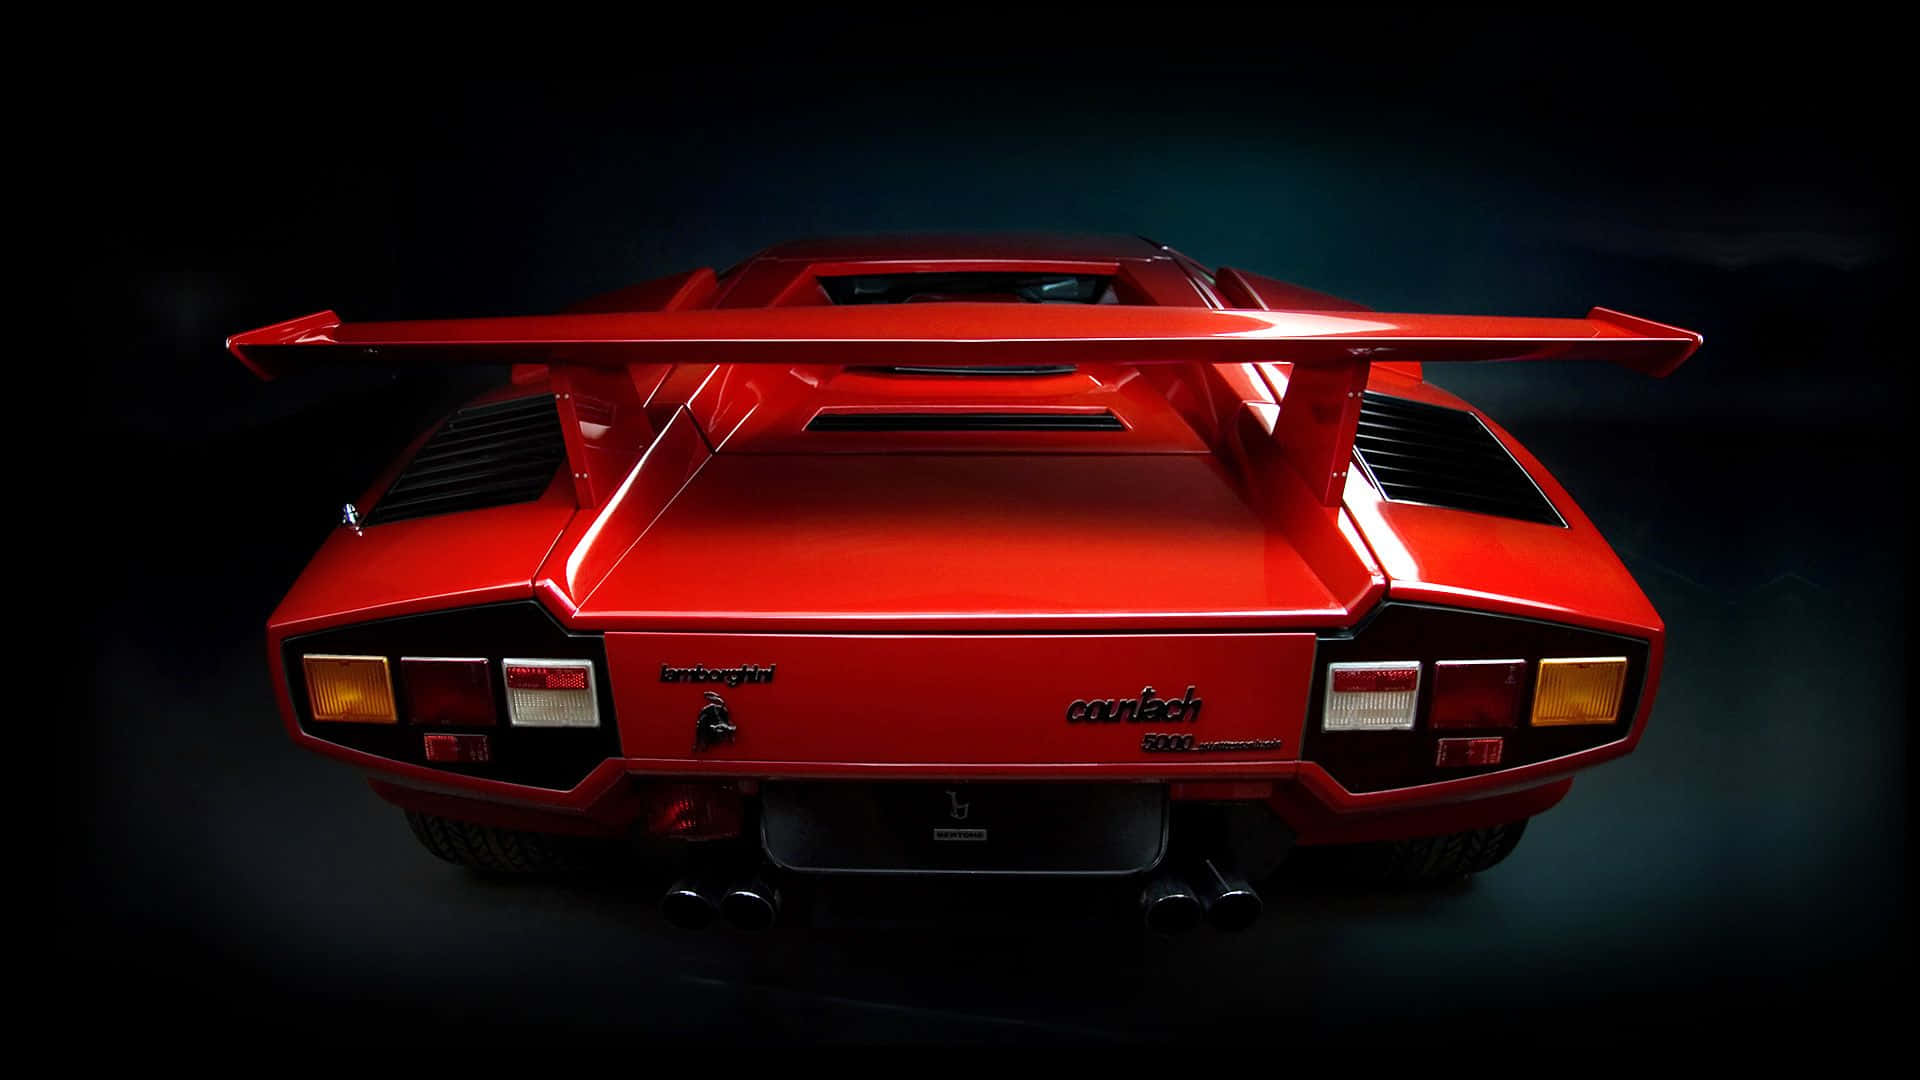 Sleek, Red Lamborghini Countach on the Road Wallpaper